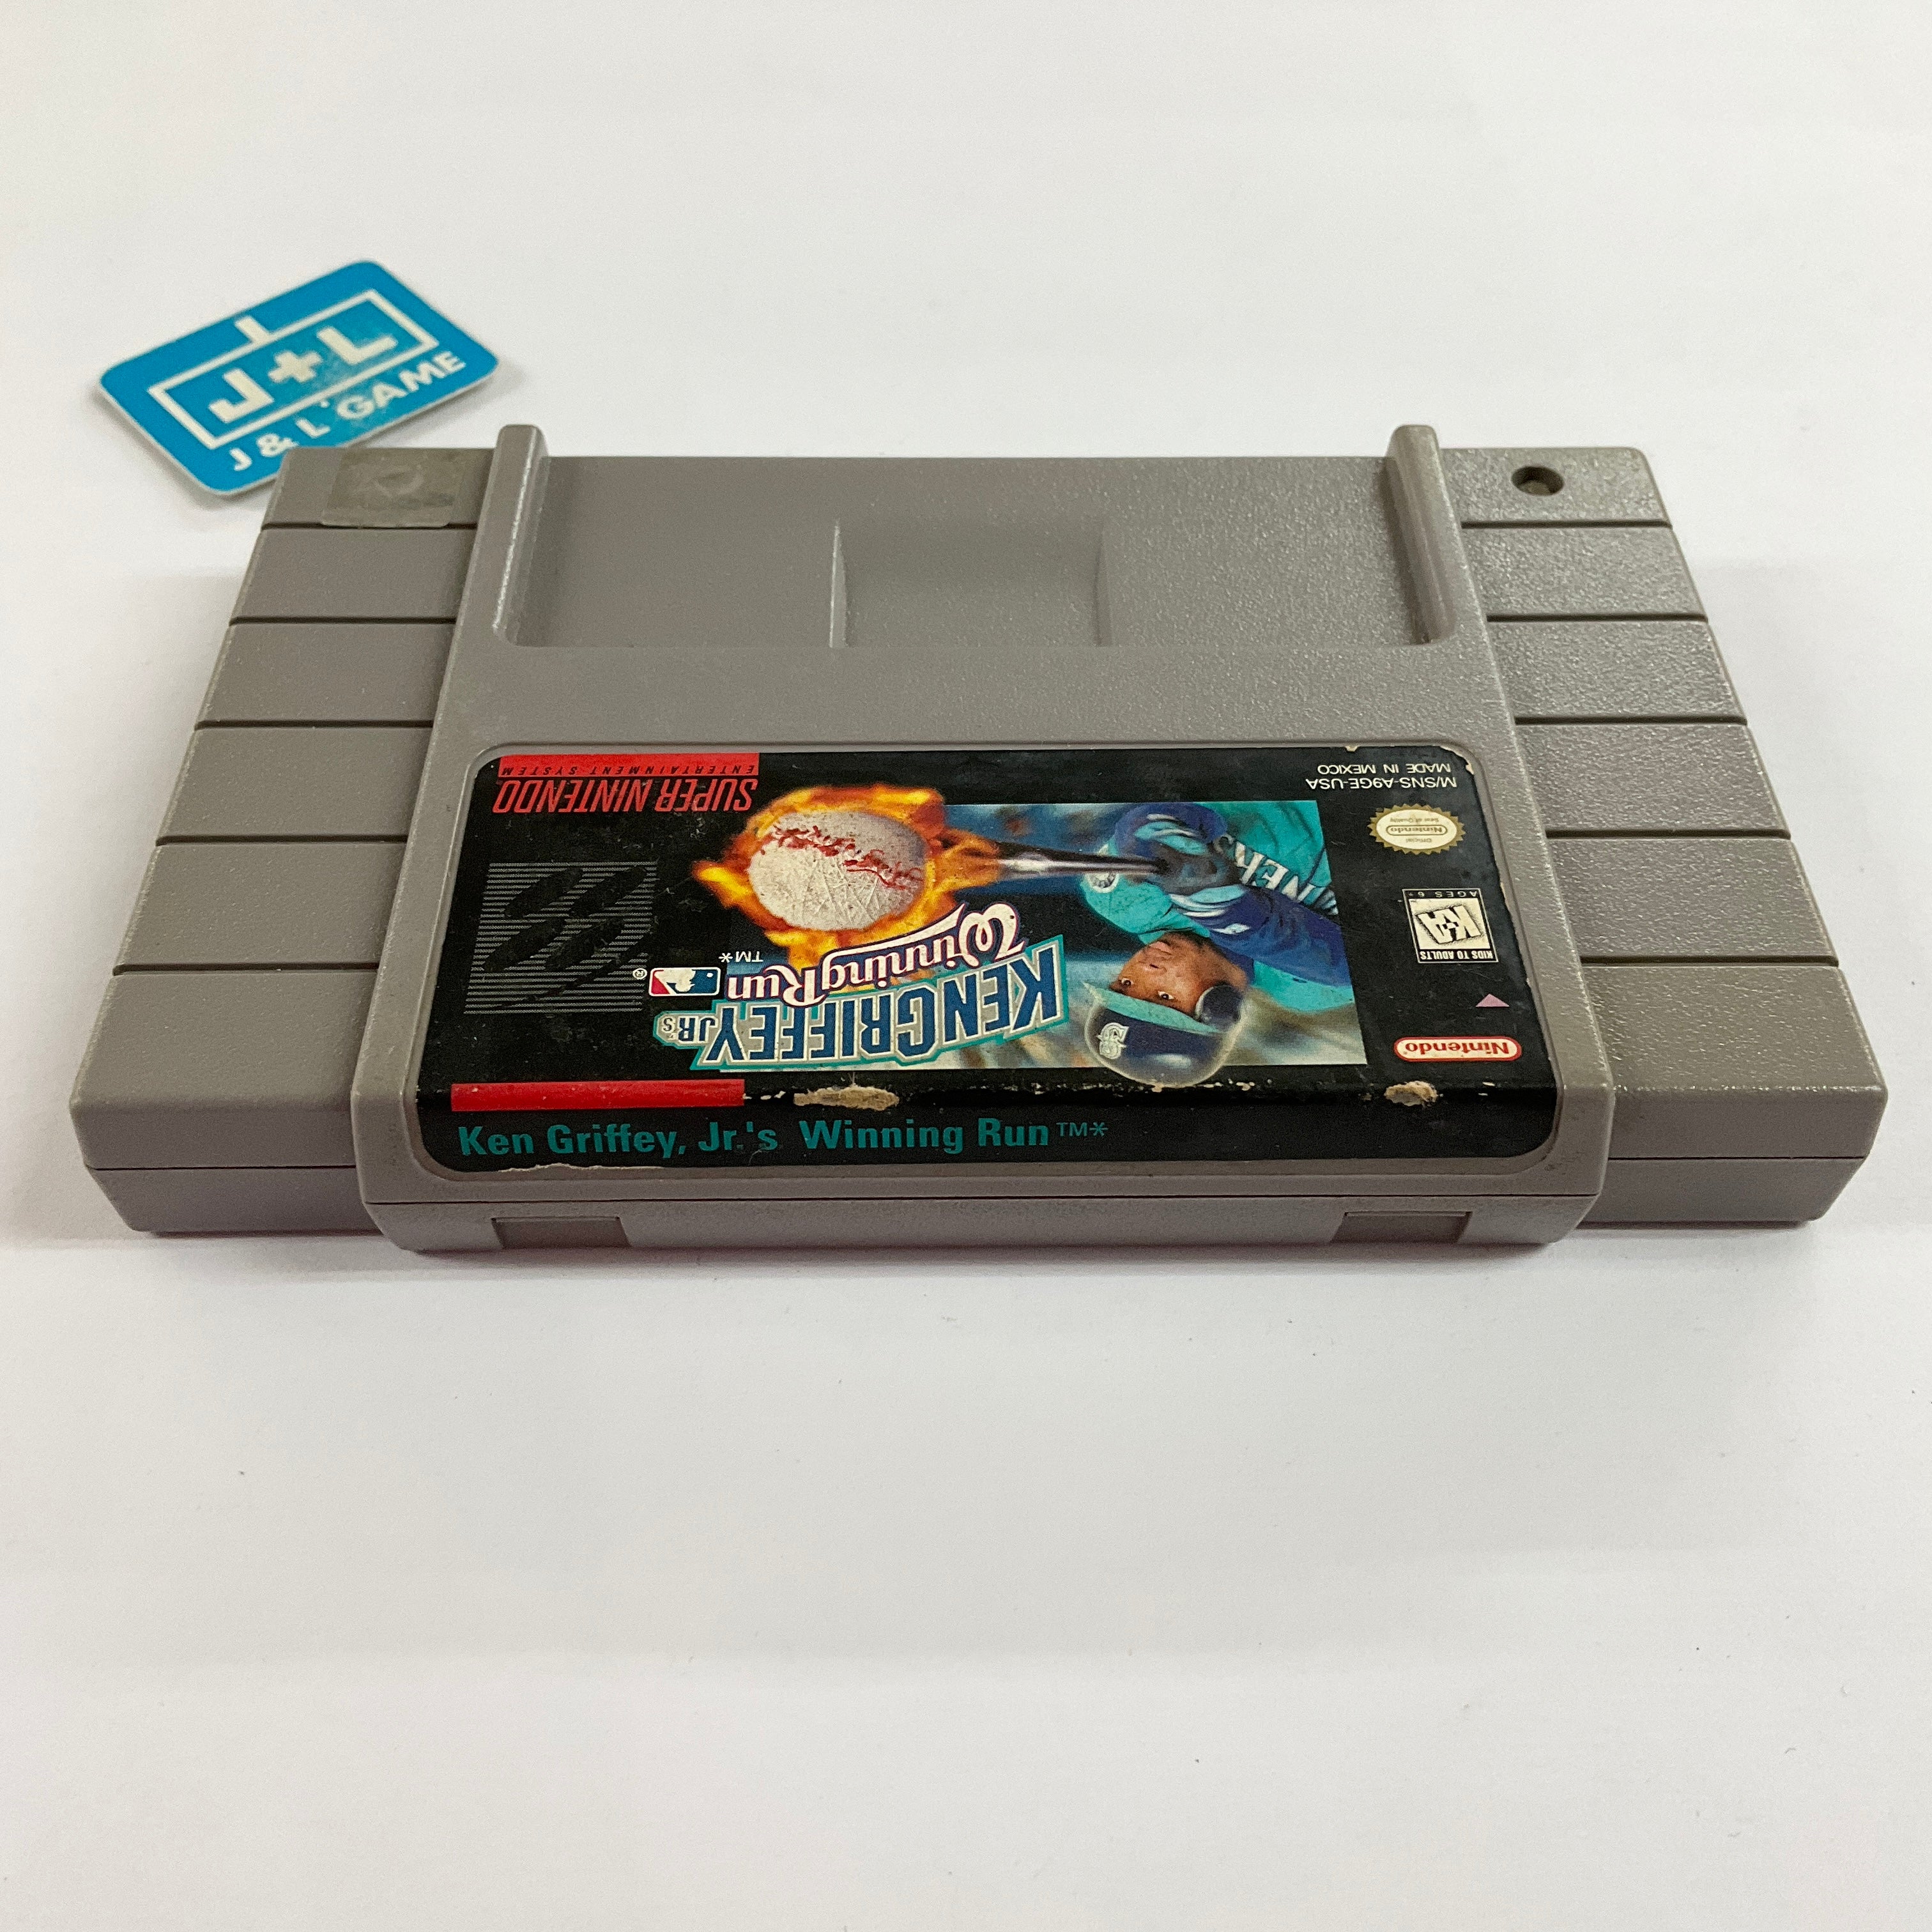 Ken Griffey Jr.'s Winning Run - (SNES) Super Nintendo [Pre-Owned] Video Games Nintendo   